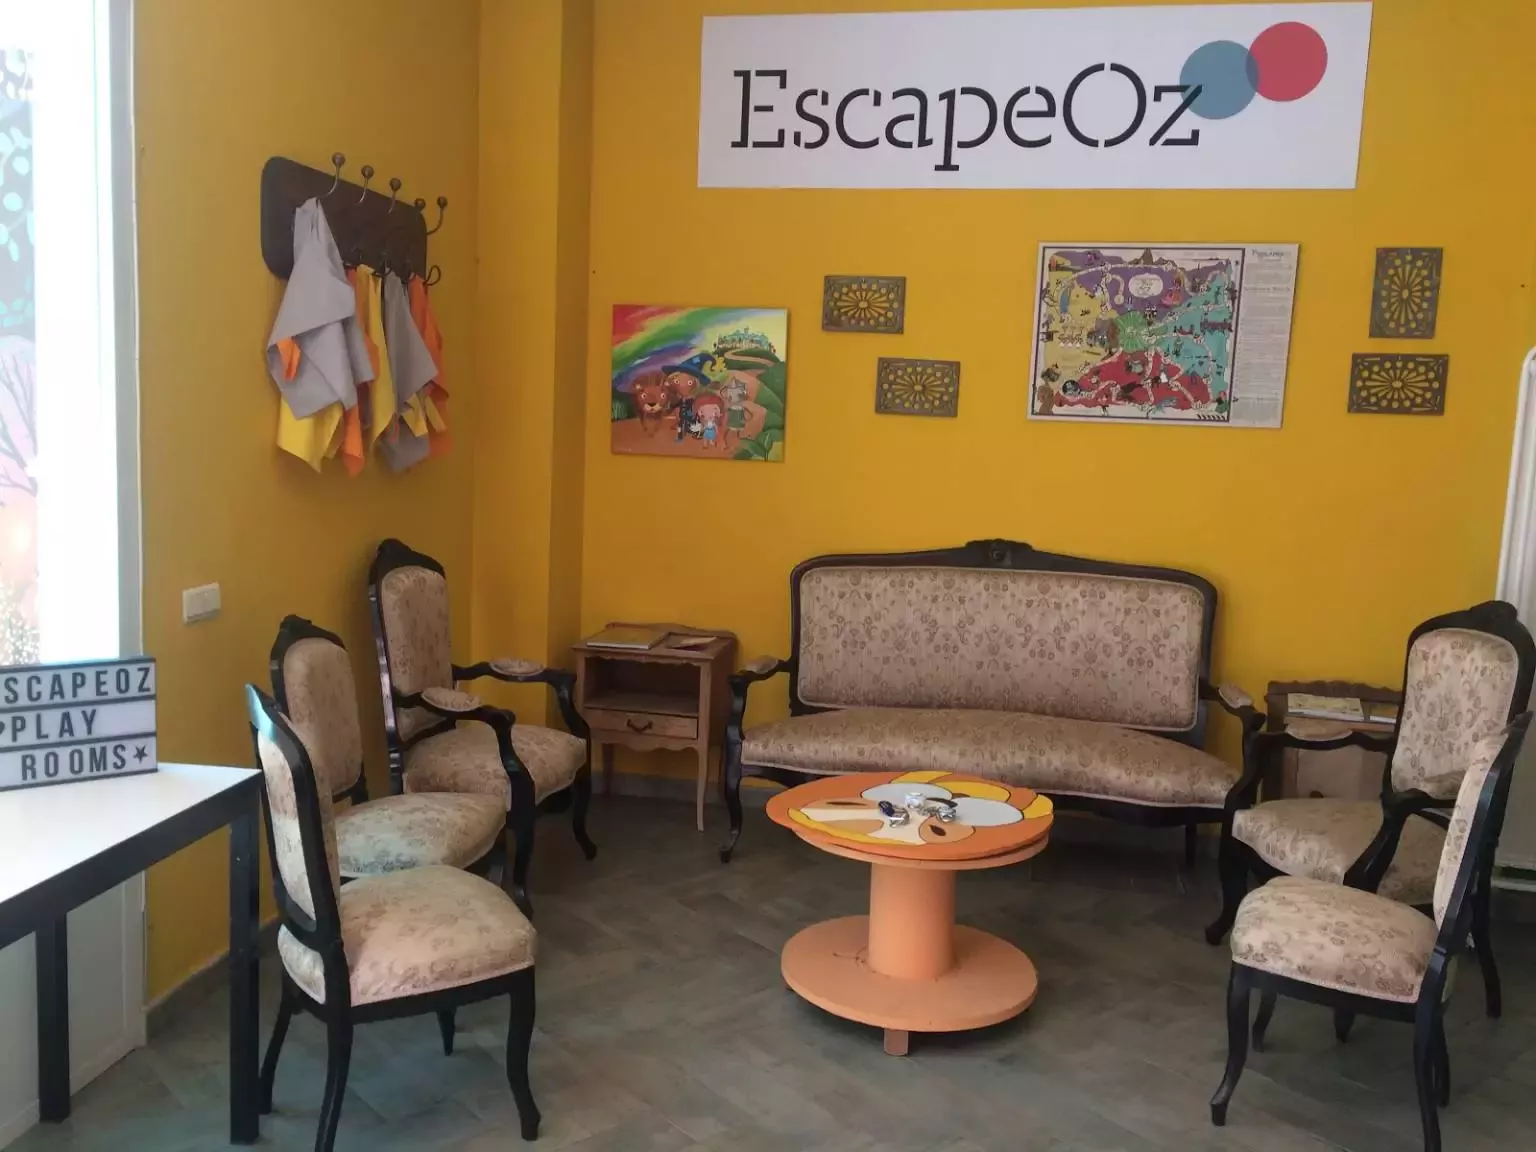 5. Playrooms Escaperoom